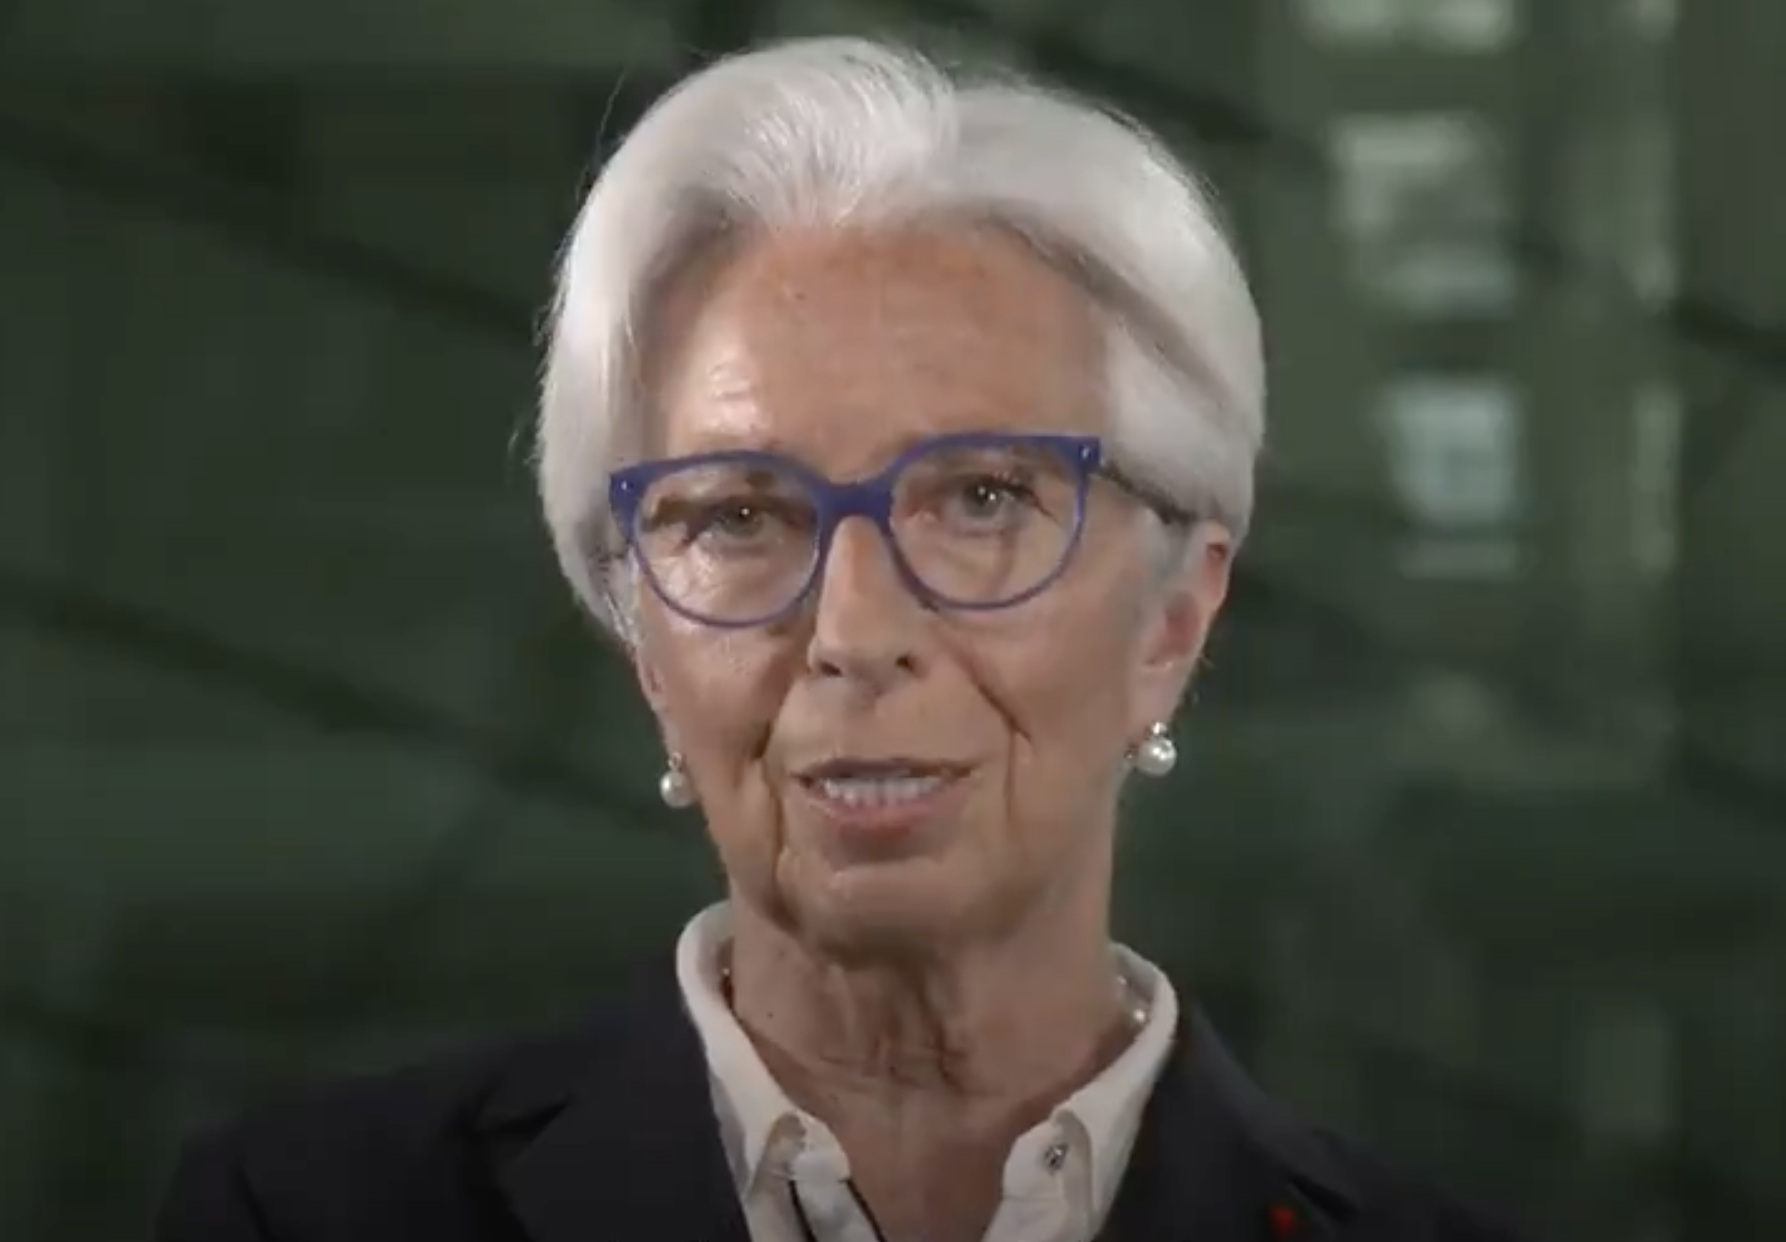 80 Central Banks Looking at Digital Currencies Says Lagarde